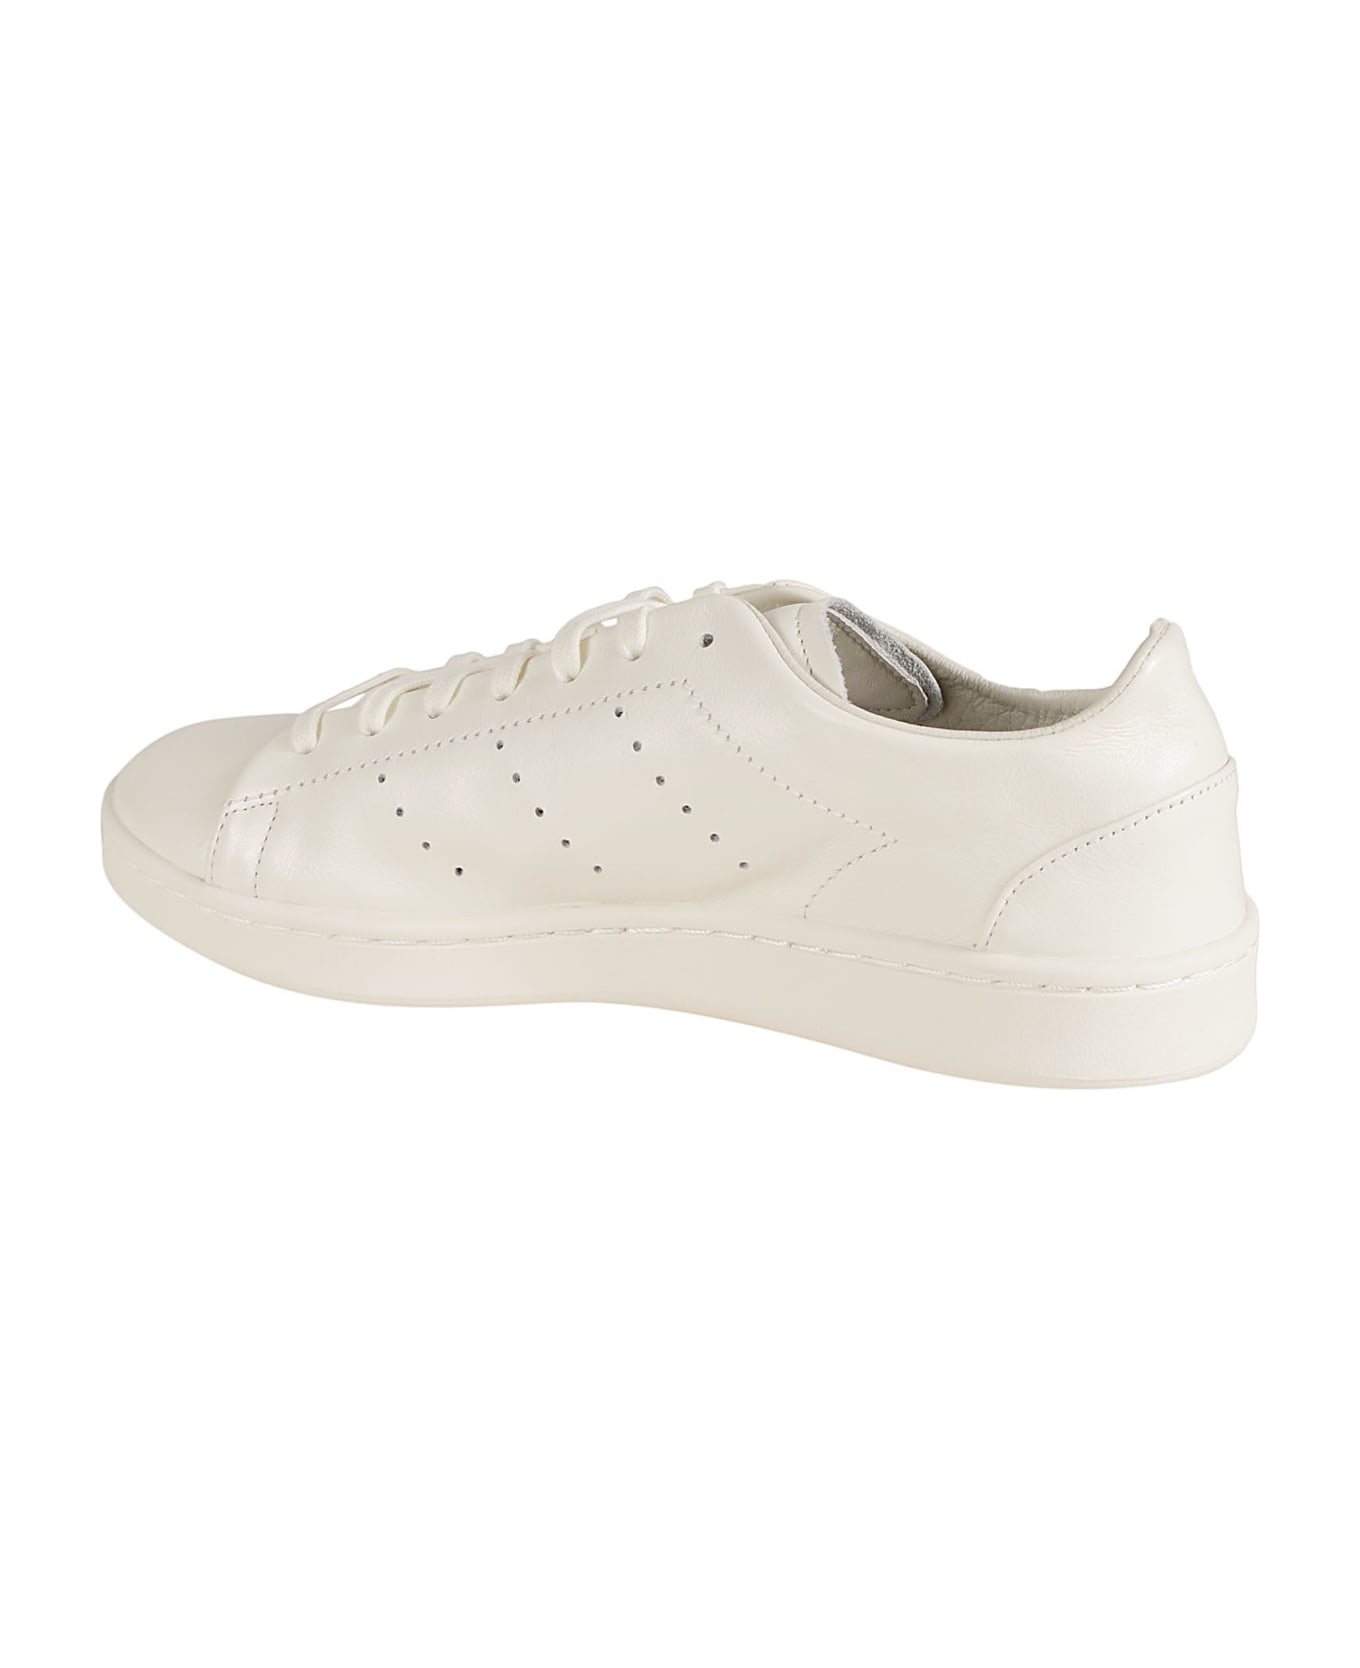 Y-3 Stan Smith Sneakers - White/Black